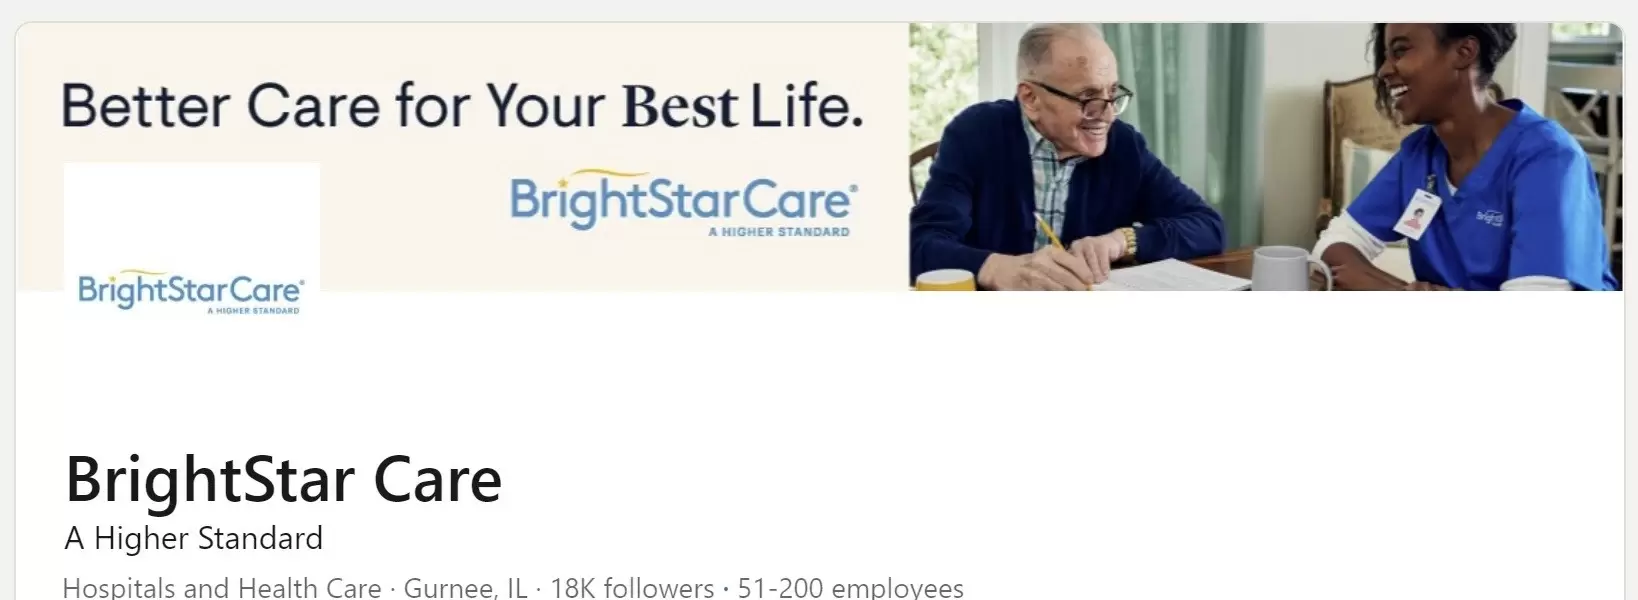 BrightStar Care on LinkedIn